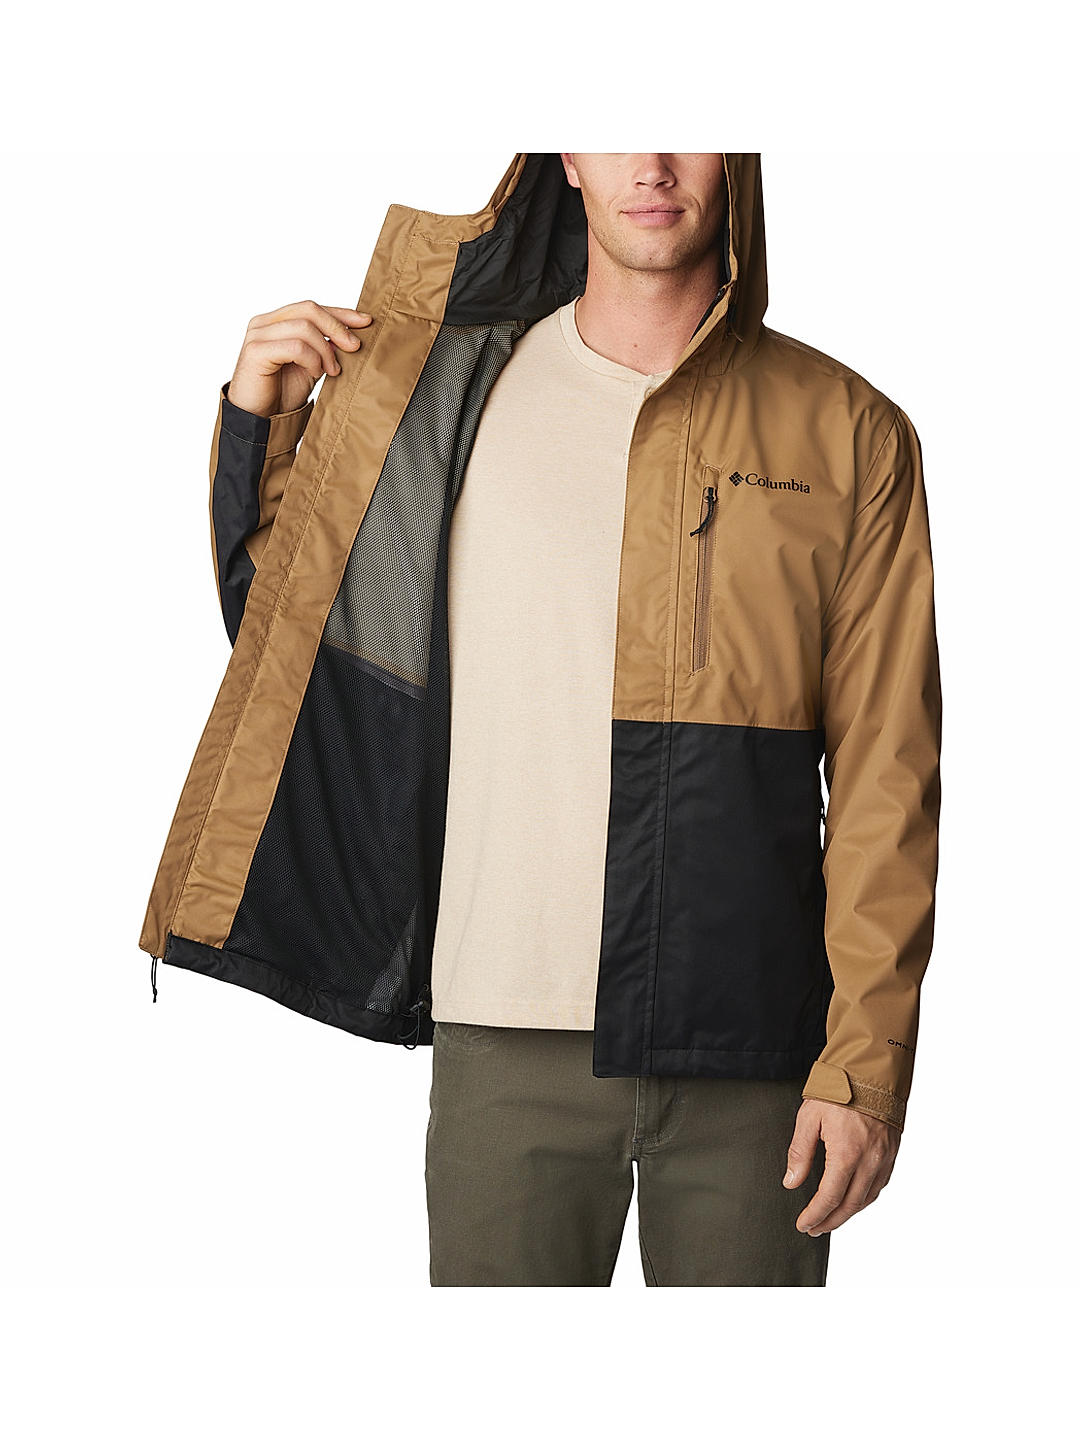 Buy Brown Hikebound Jacket for Men Online at Columbia Sportswear